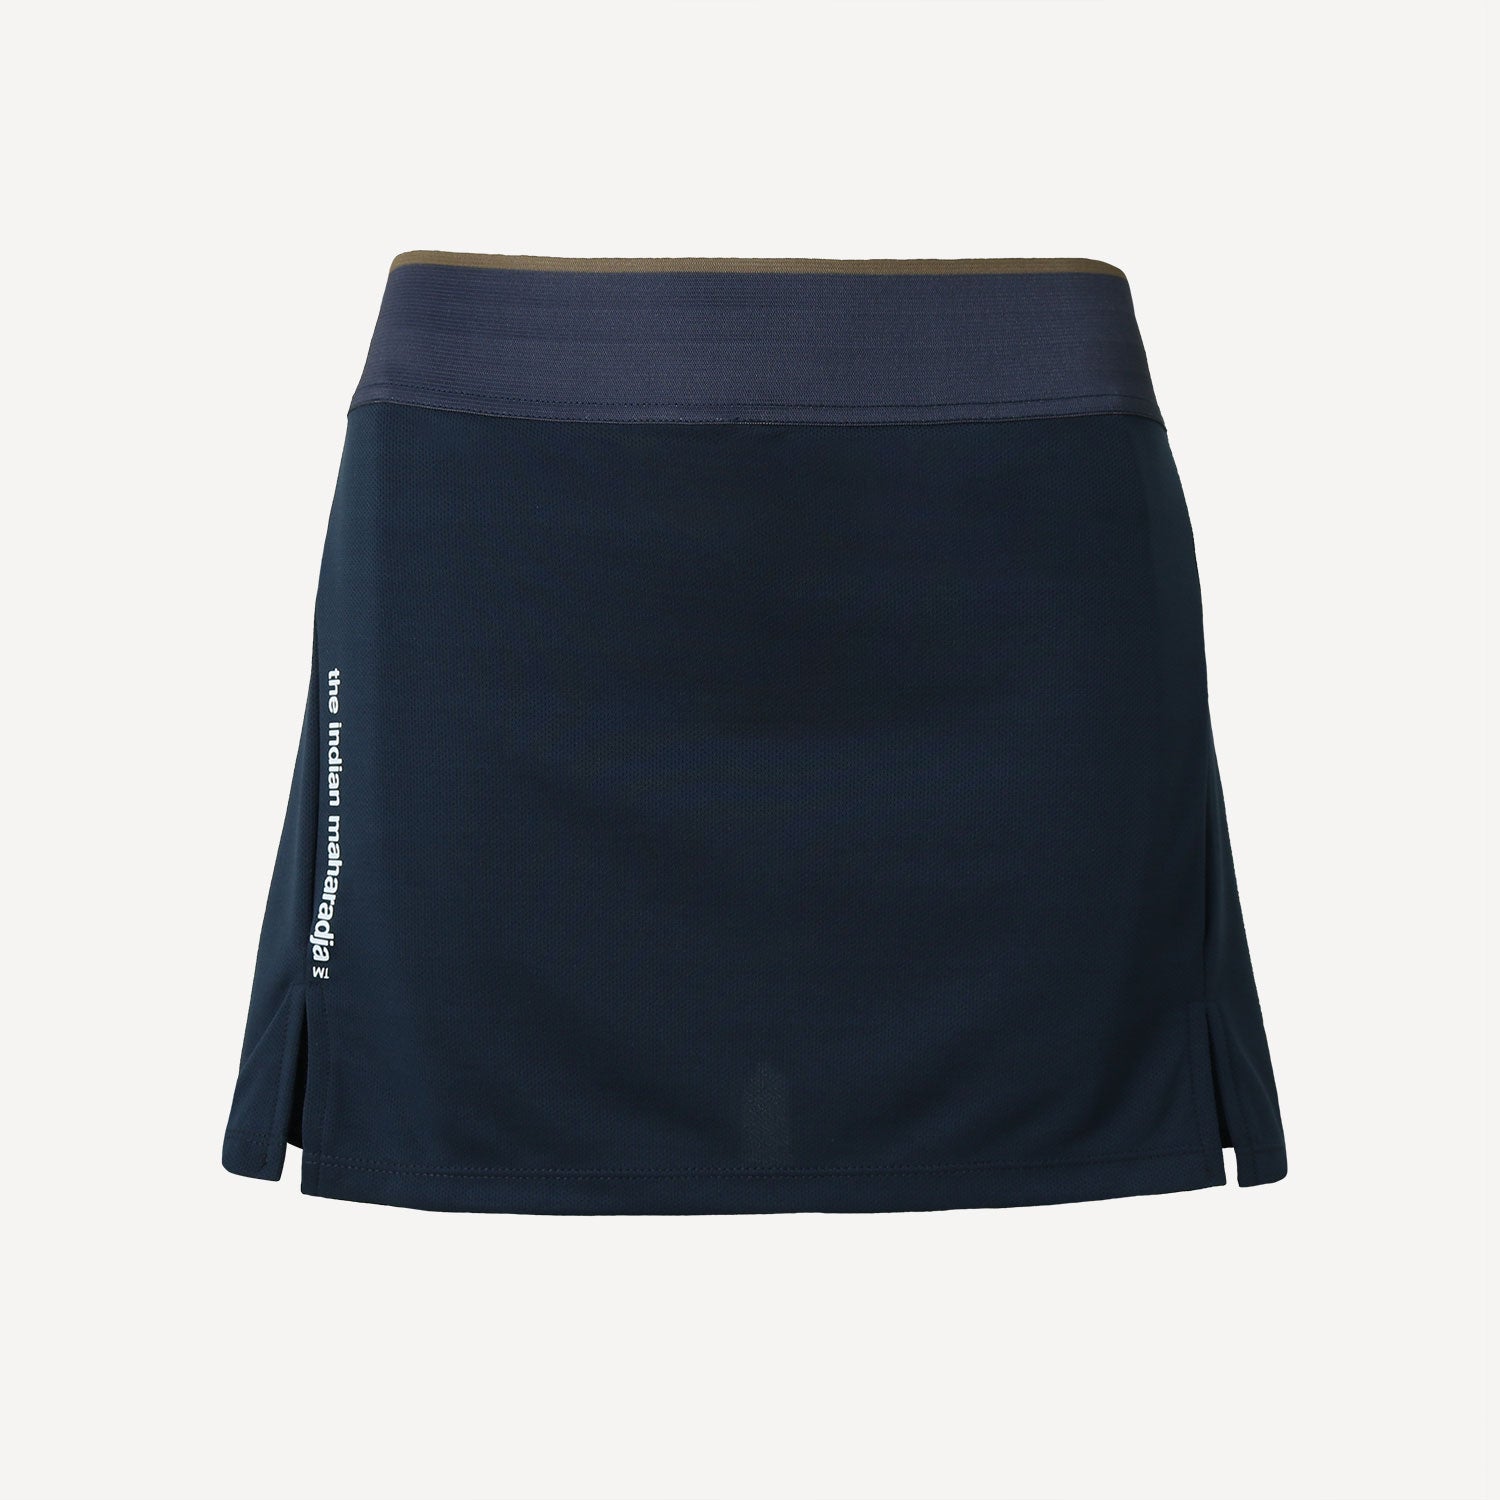 The Indian Maharadja Kadiri Women's Pique Tennis Skirt - Dark Blue (1)